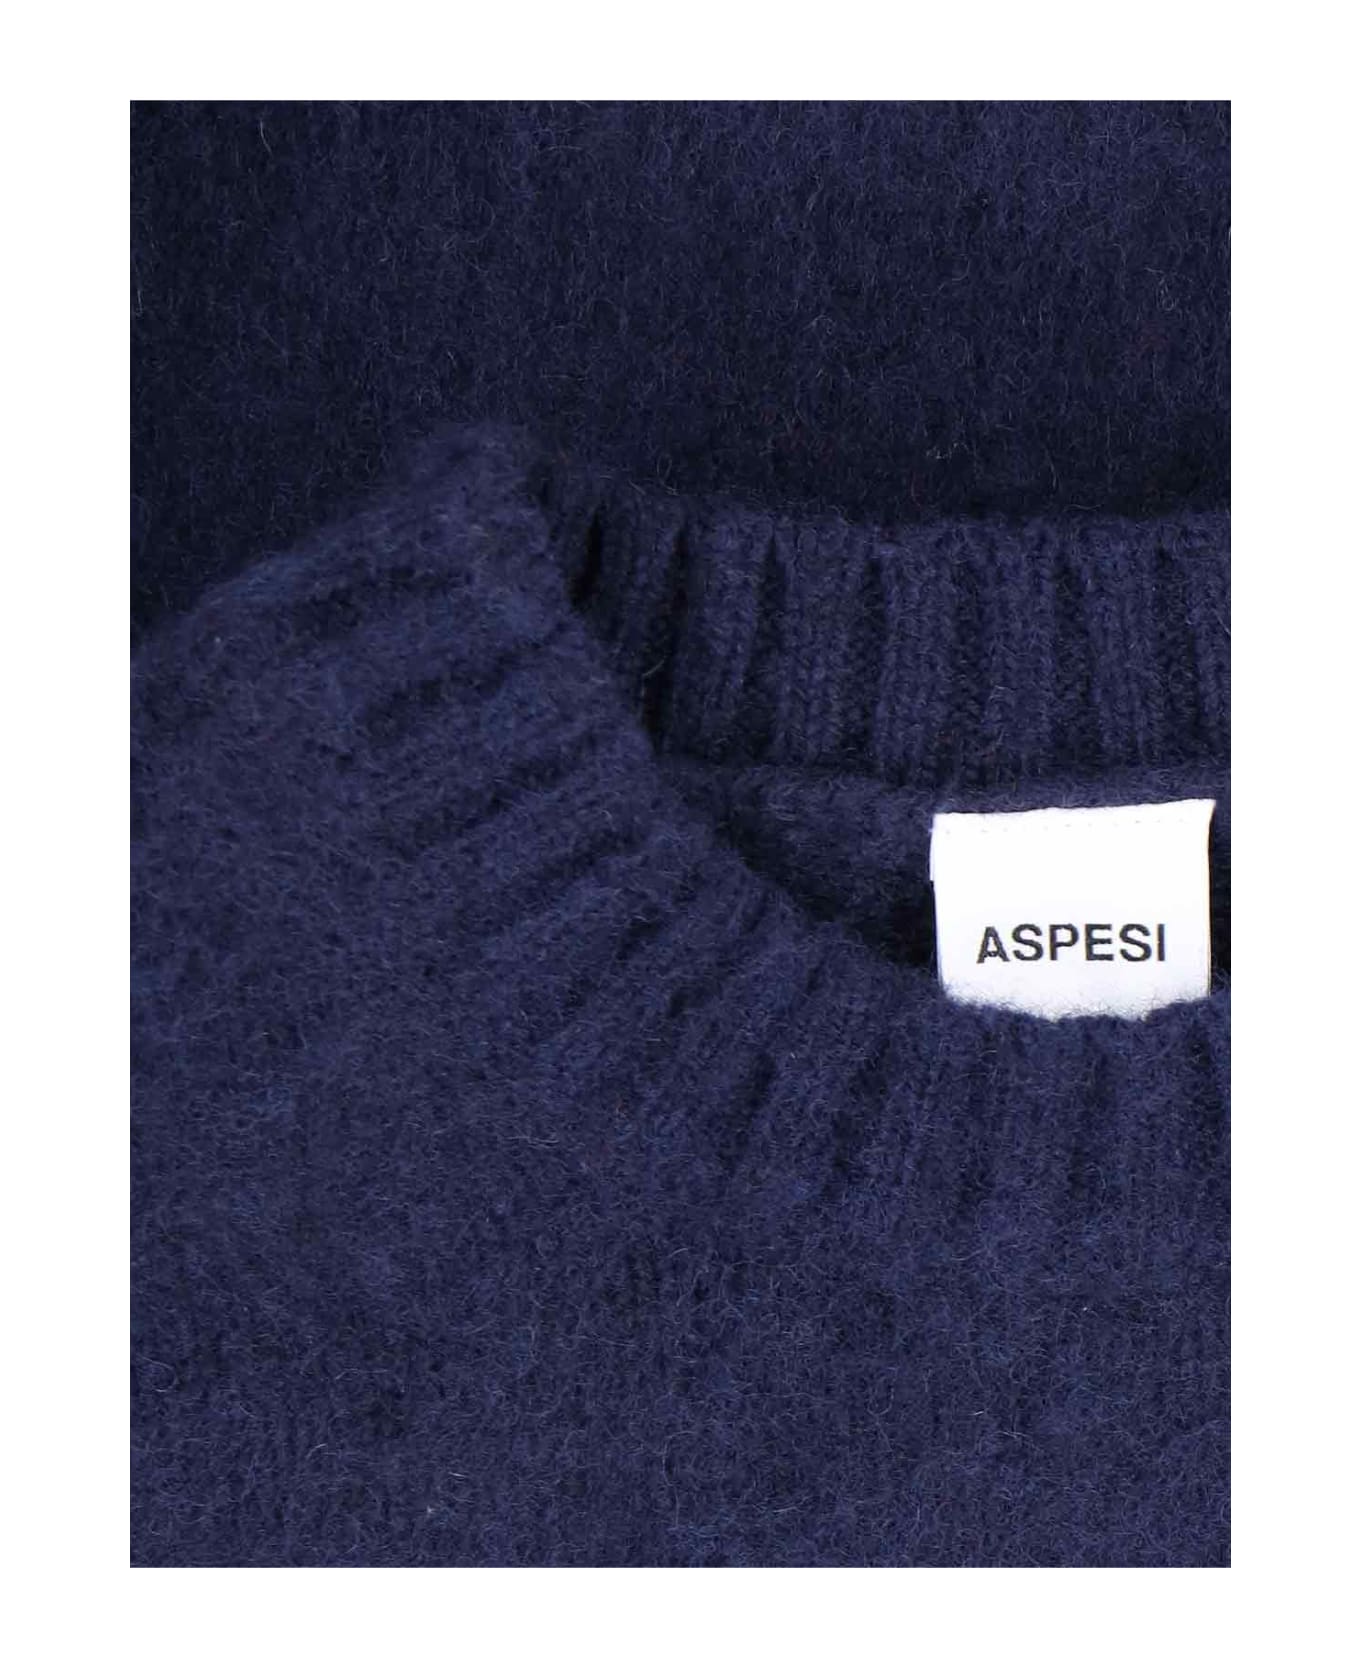 Aspesi 'm183' Sweater - Navy